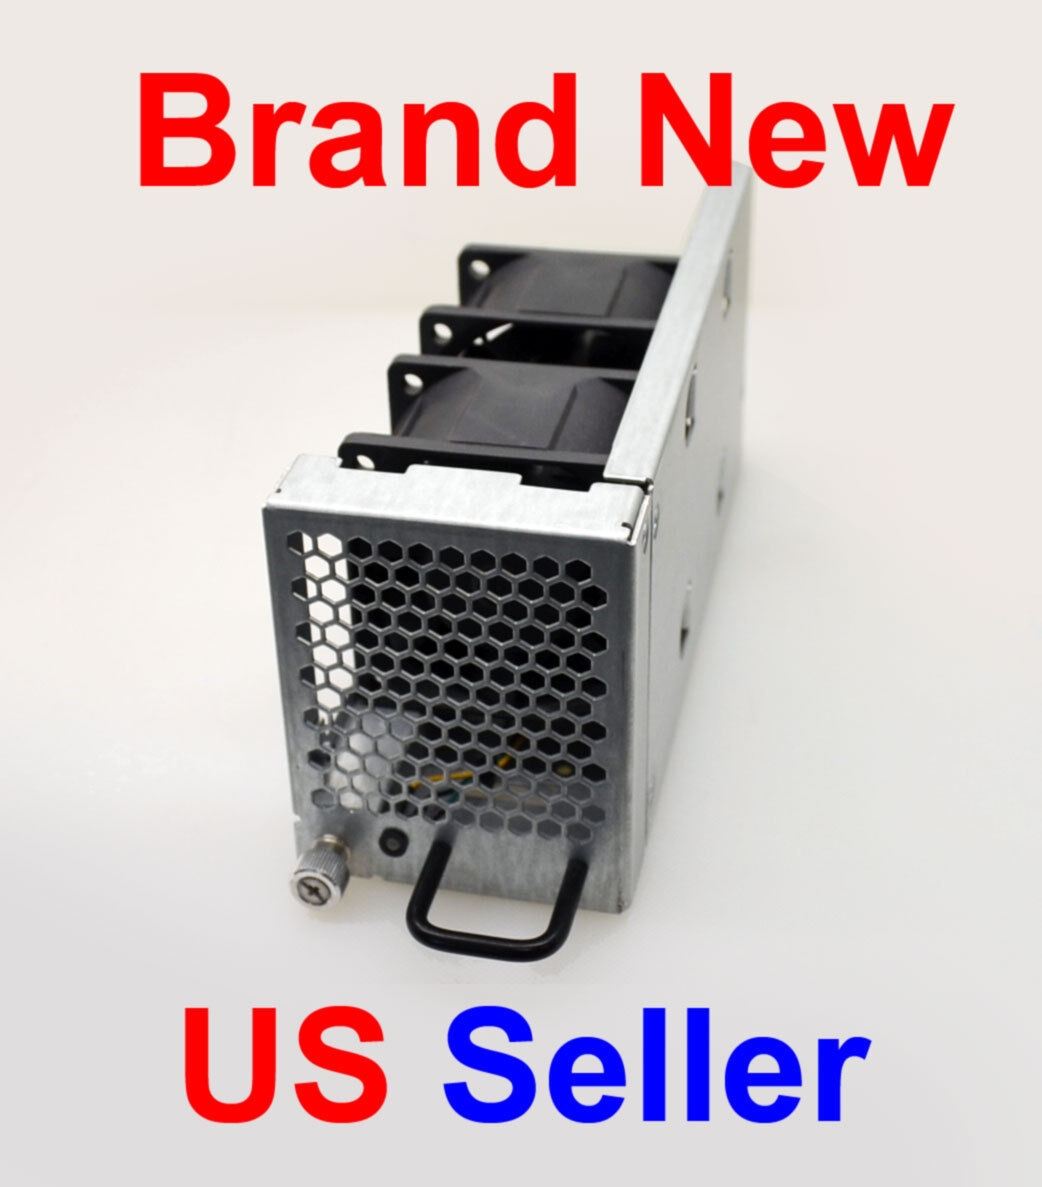 1x Fan Module for EMC Connectrix DS-5300B 80 Ports Brocade Switch **BRAND NEW**